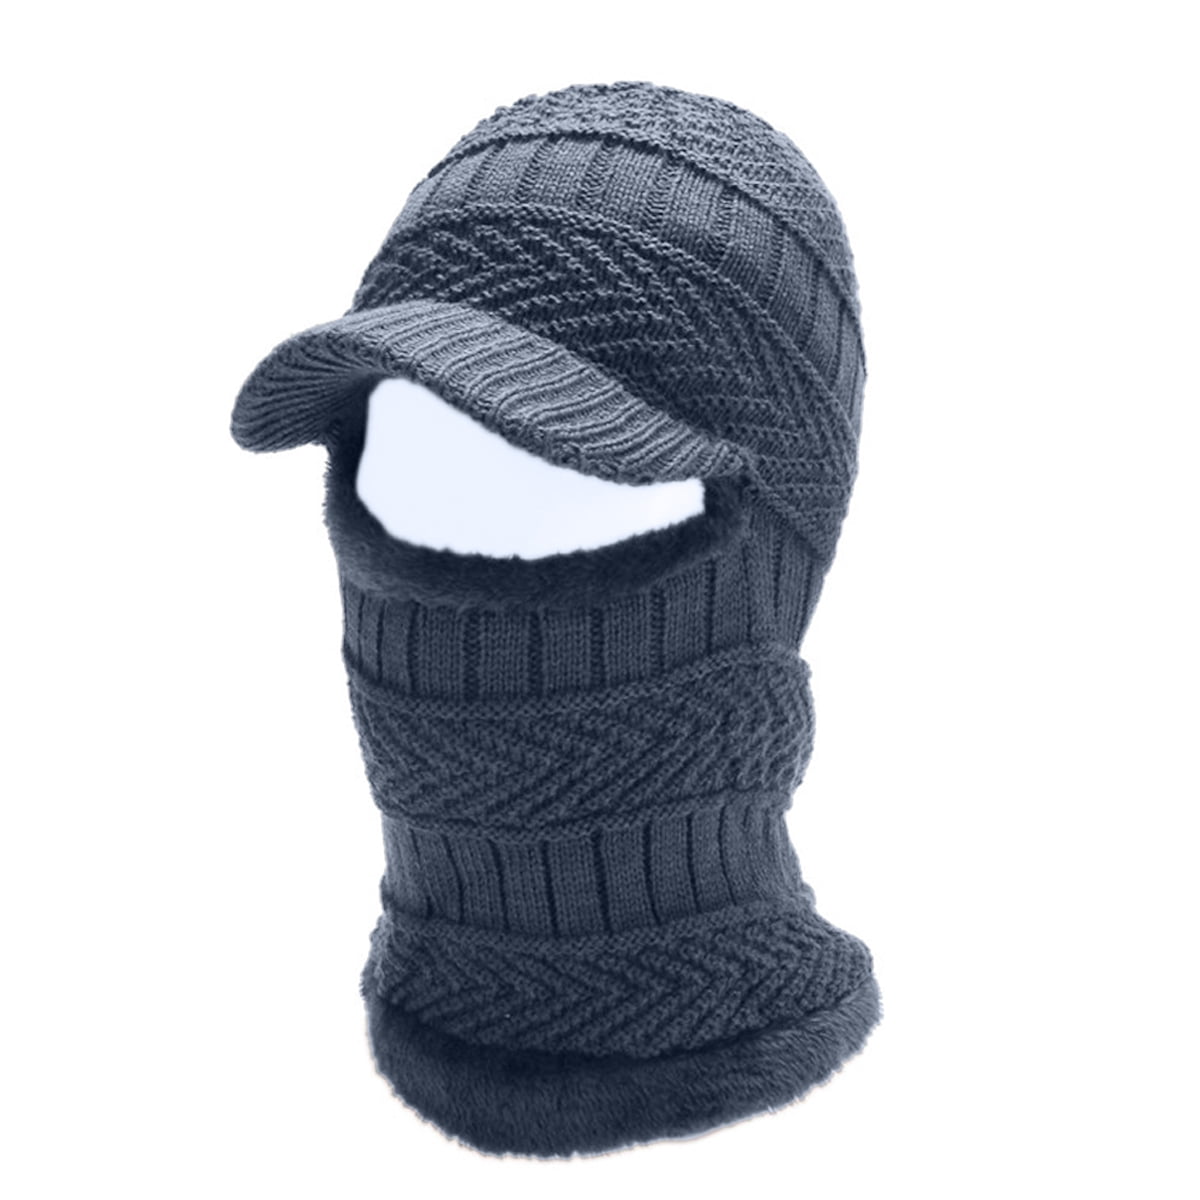 Winter Knitted Balaclava Beanie Hat Warm Cycling Ski Mask Universal Size -  Windproof Full Face Mask Cold Weather,Gray